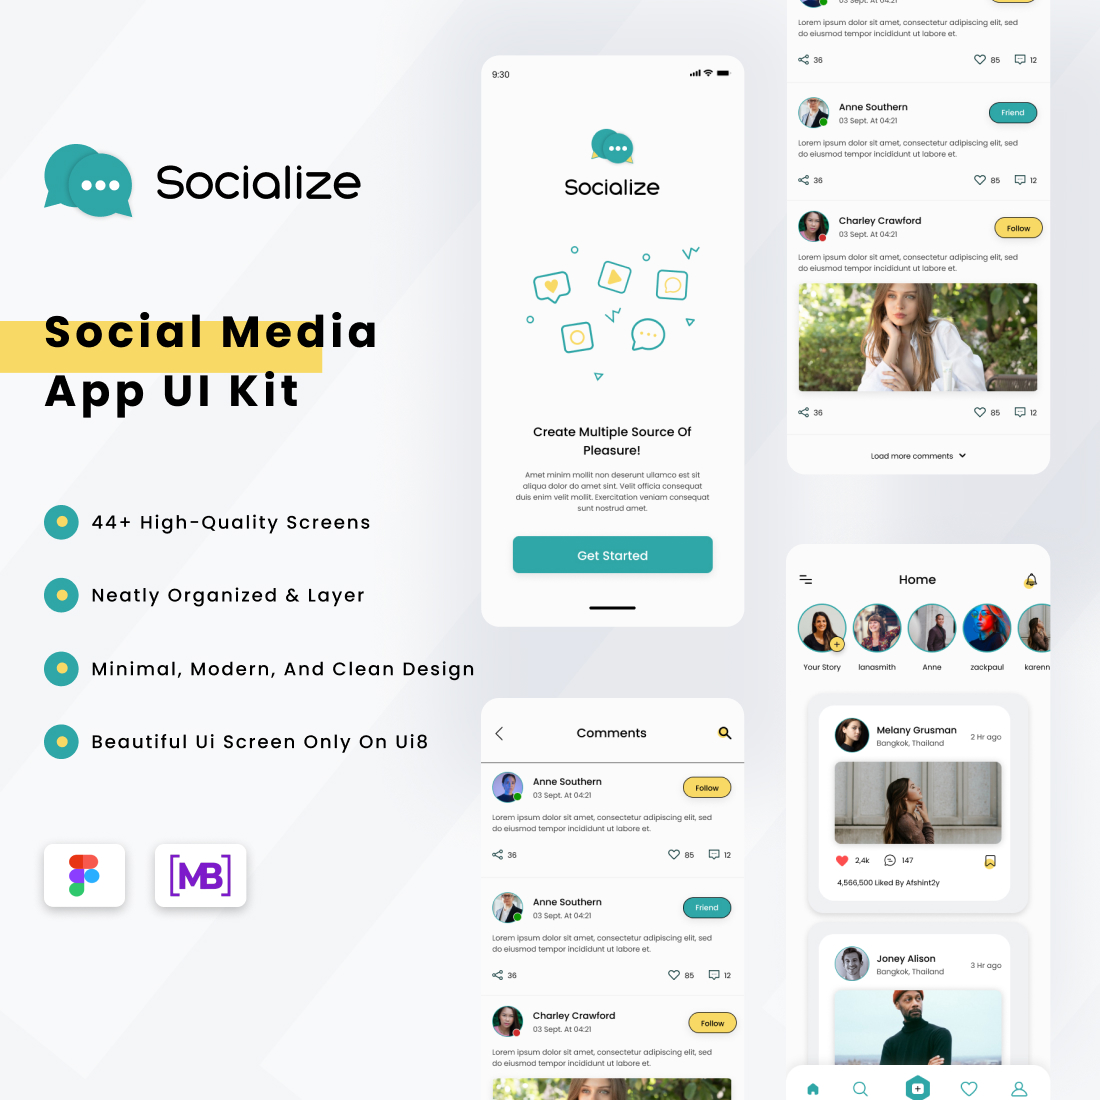 Socialize Social Media Mobile App Ui Kit cover image.